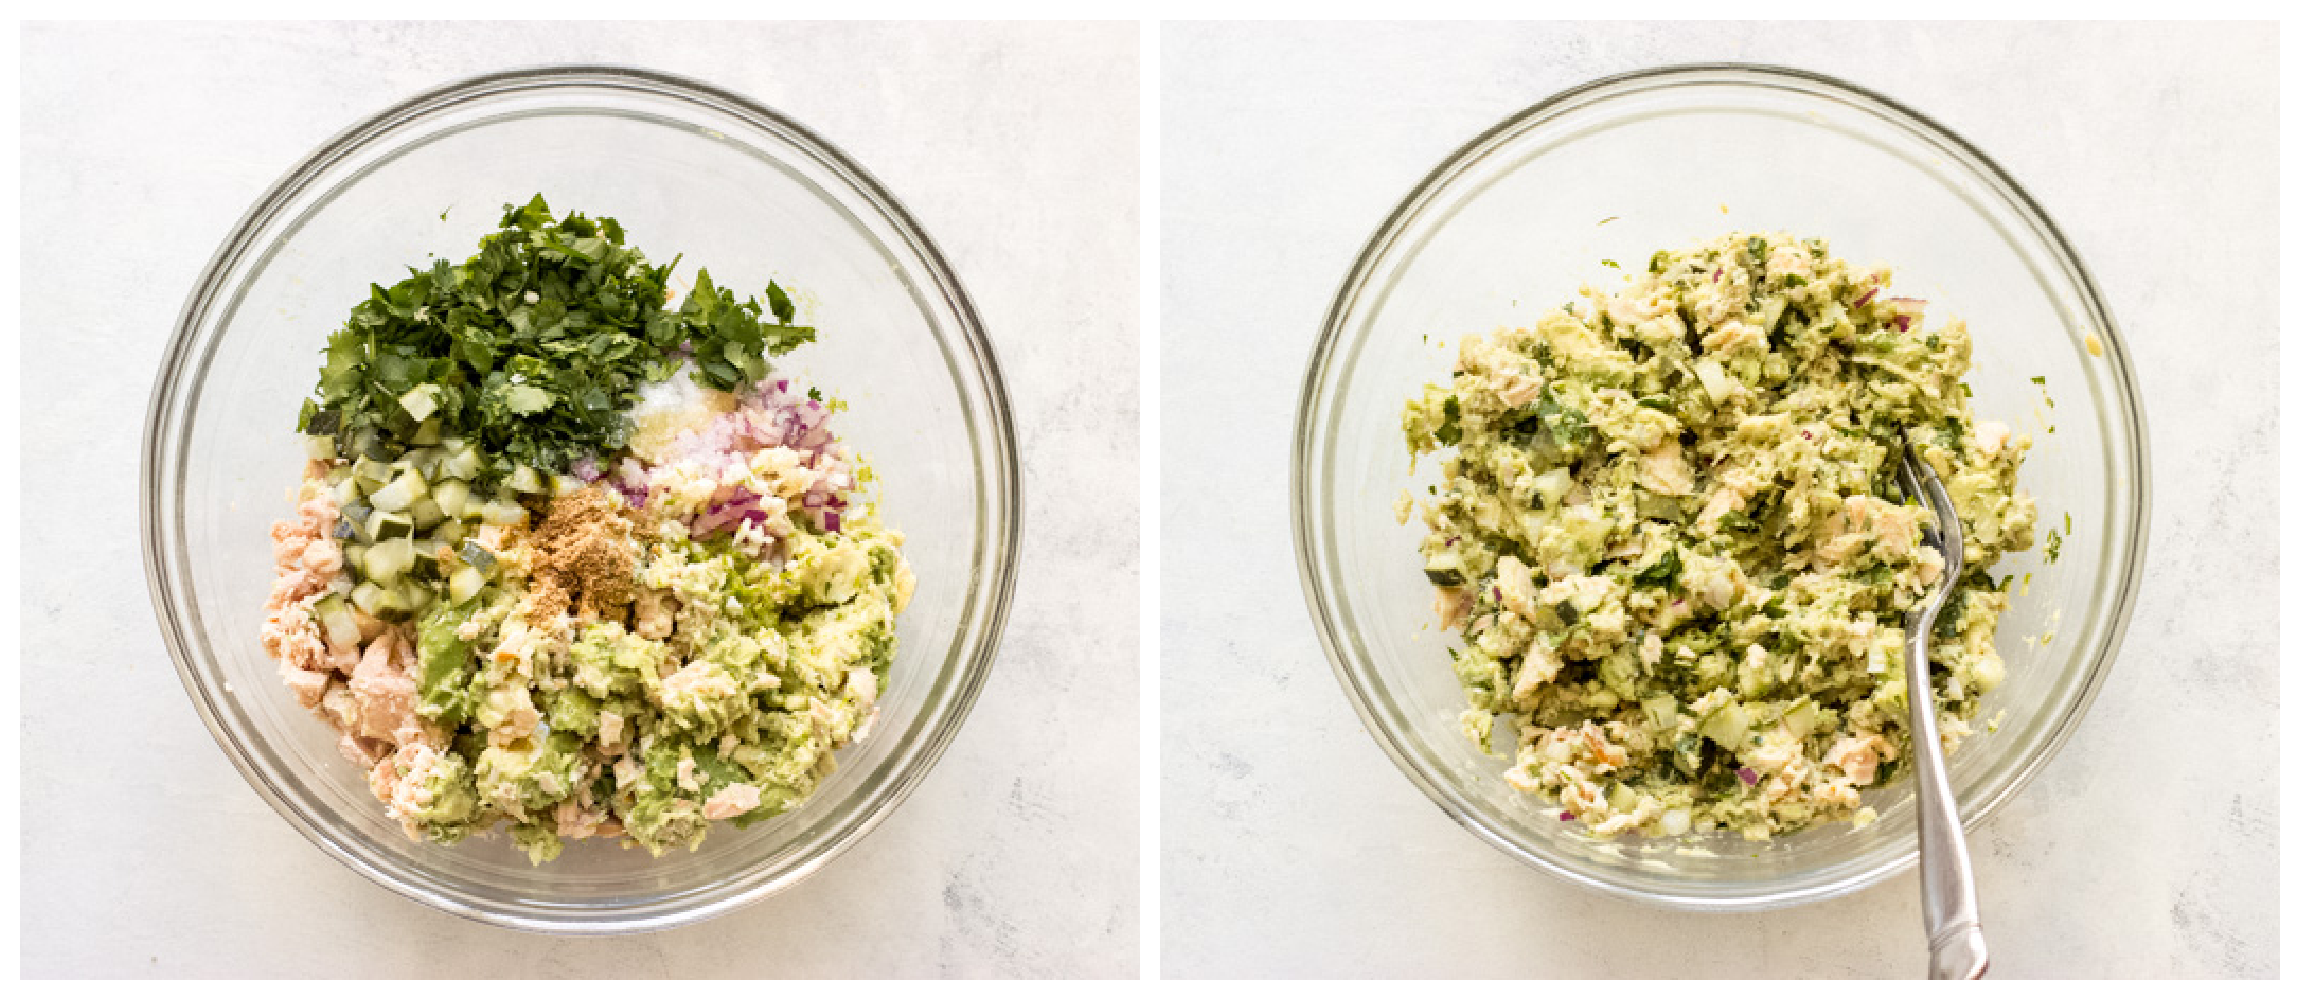 creamy avocado tuna salad in a glass bowl.